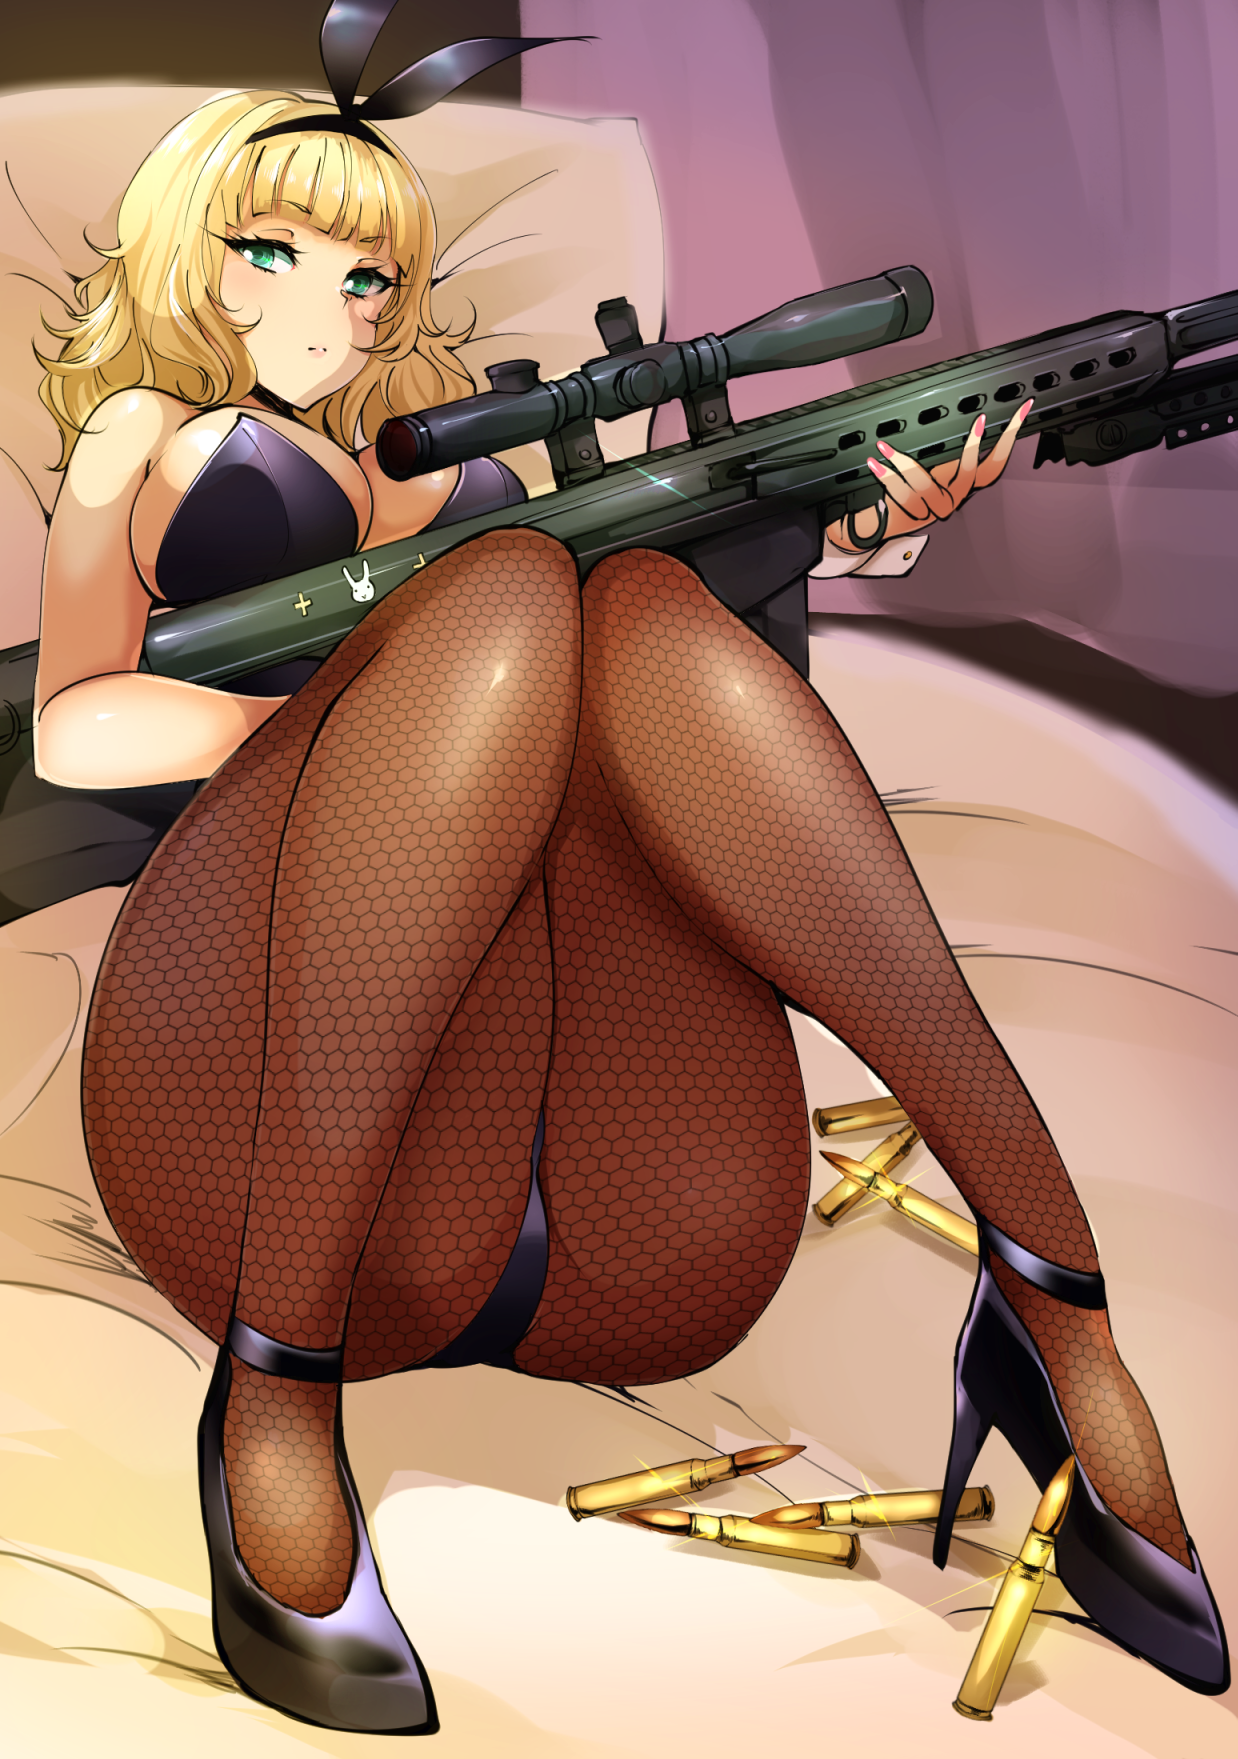 Anime 1238x1759 anime anime girls digital art artwork 2D portrait display rifles ammunition high heels bunny suit bunny girl in bed ass